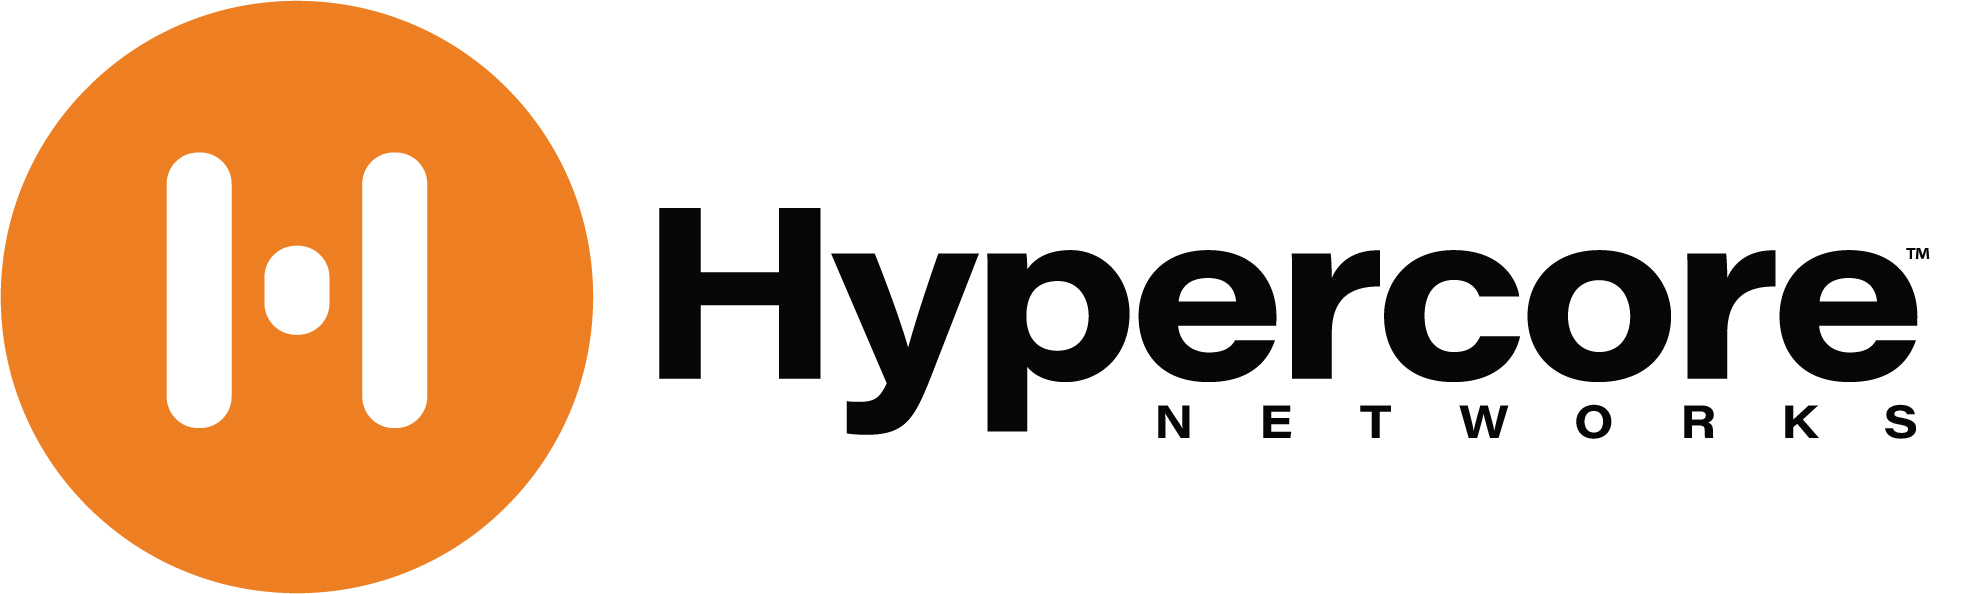 Hypercore_Networks_Telnet_Group